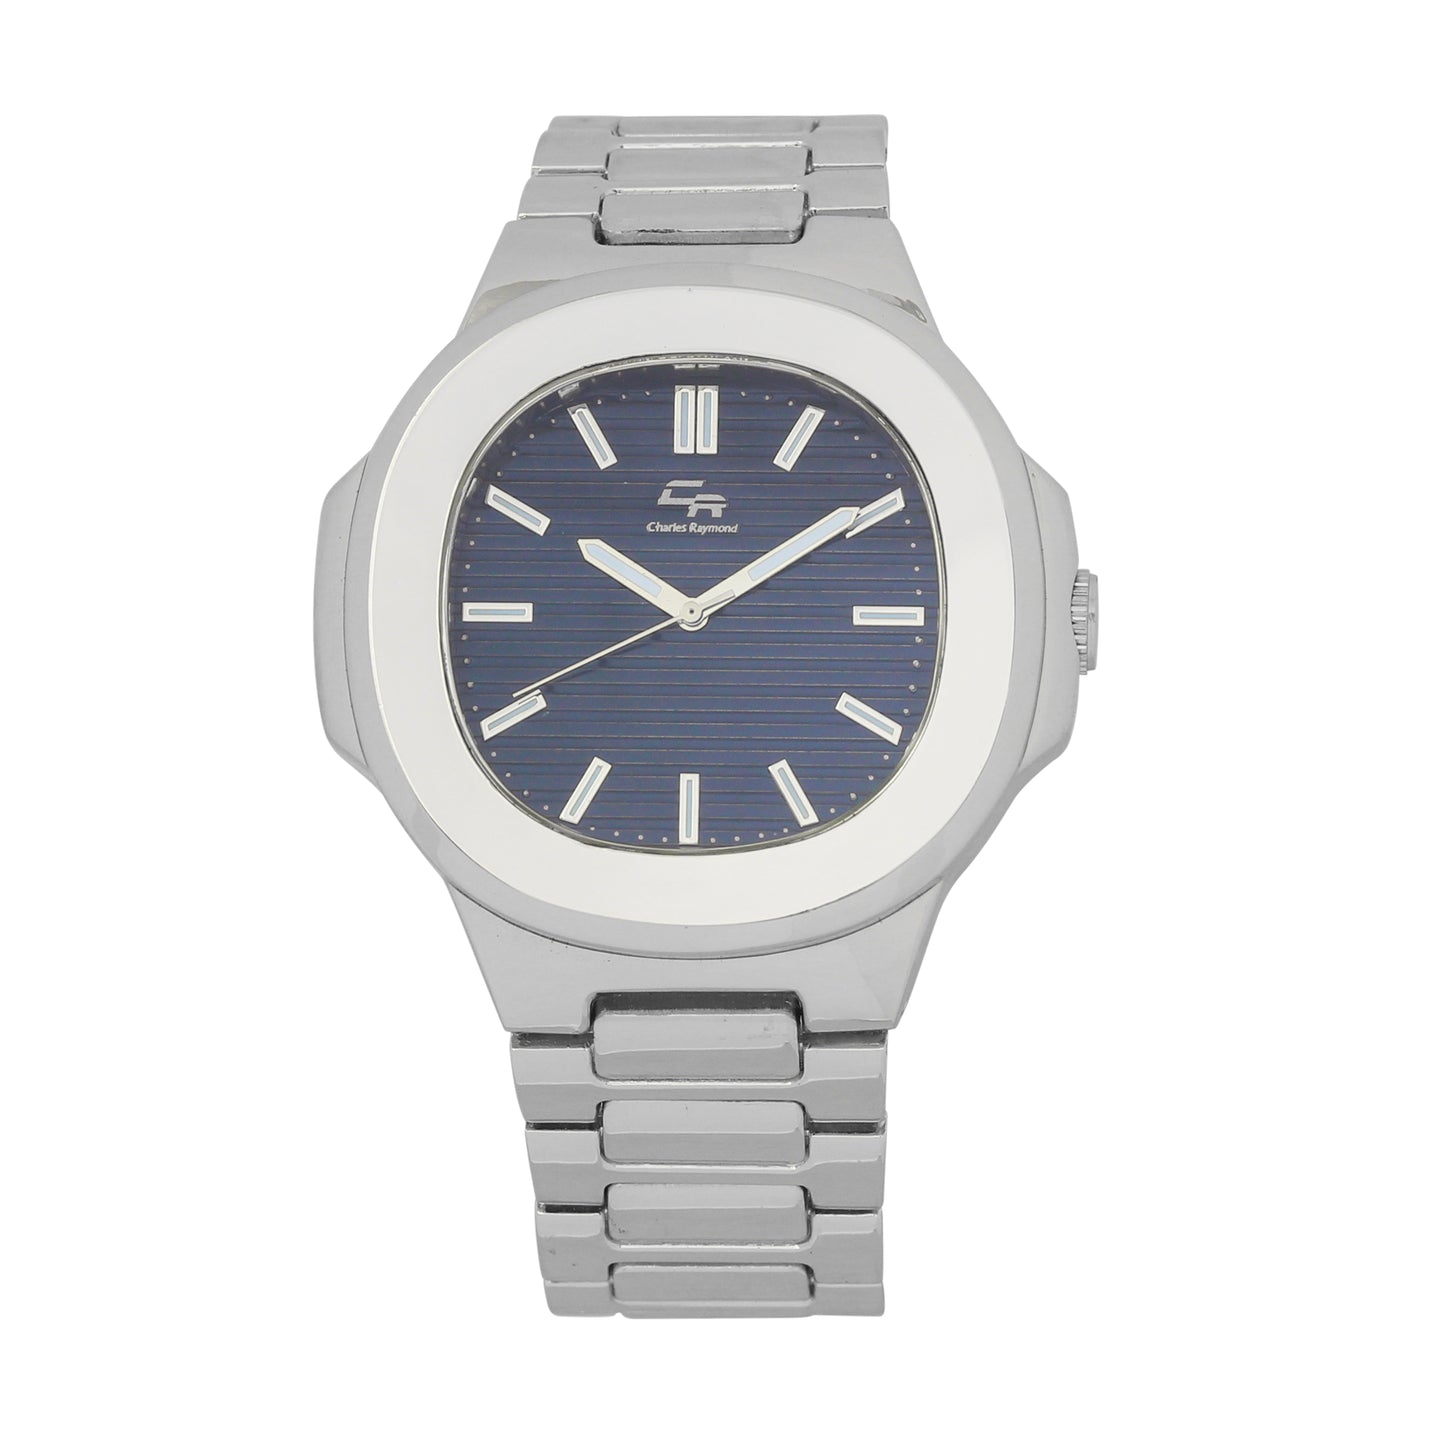 ST10560 Classic Oblong Watch